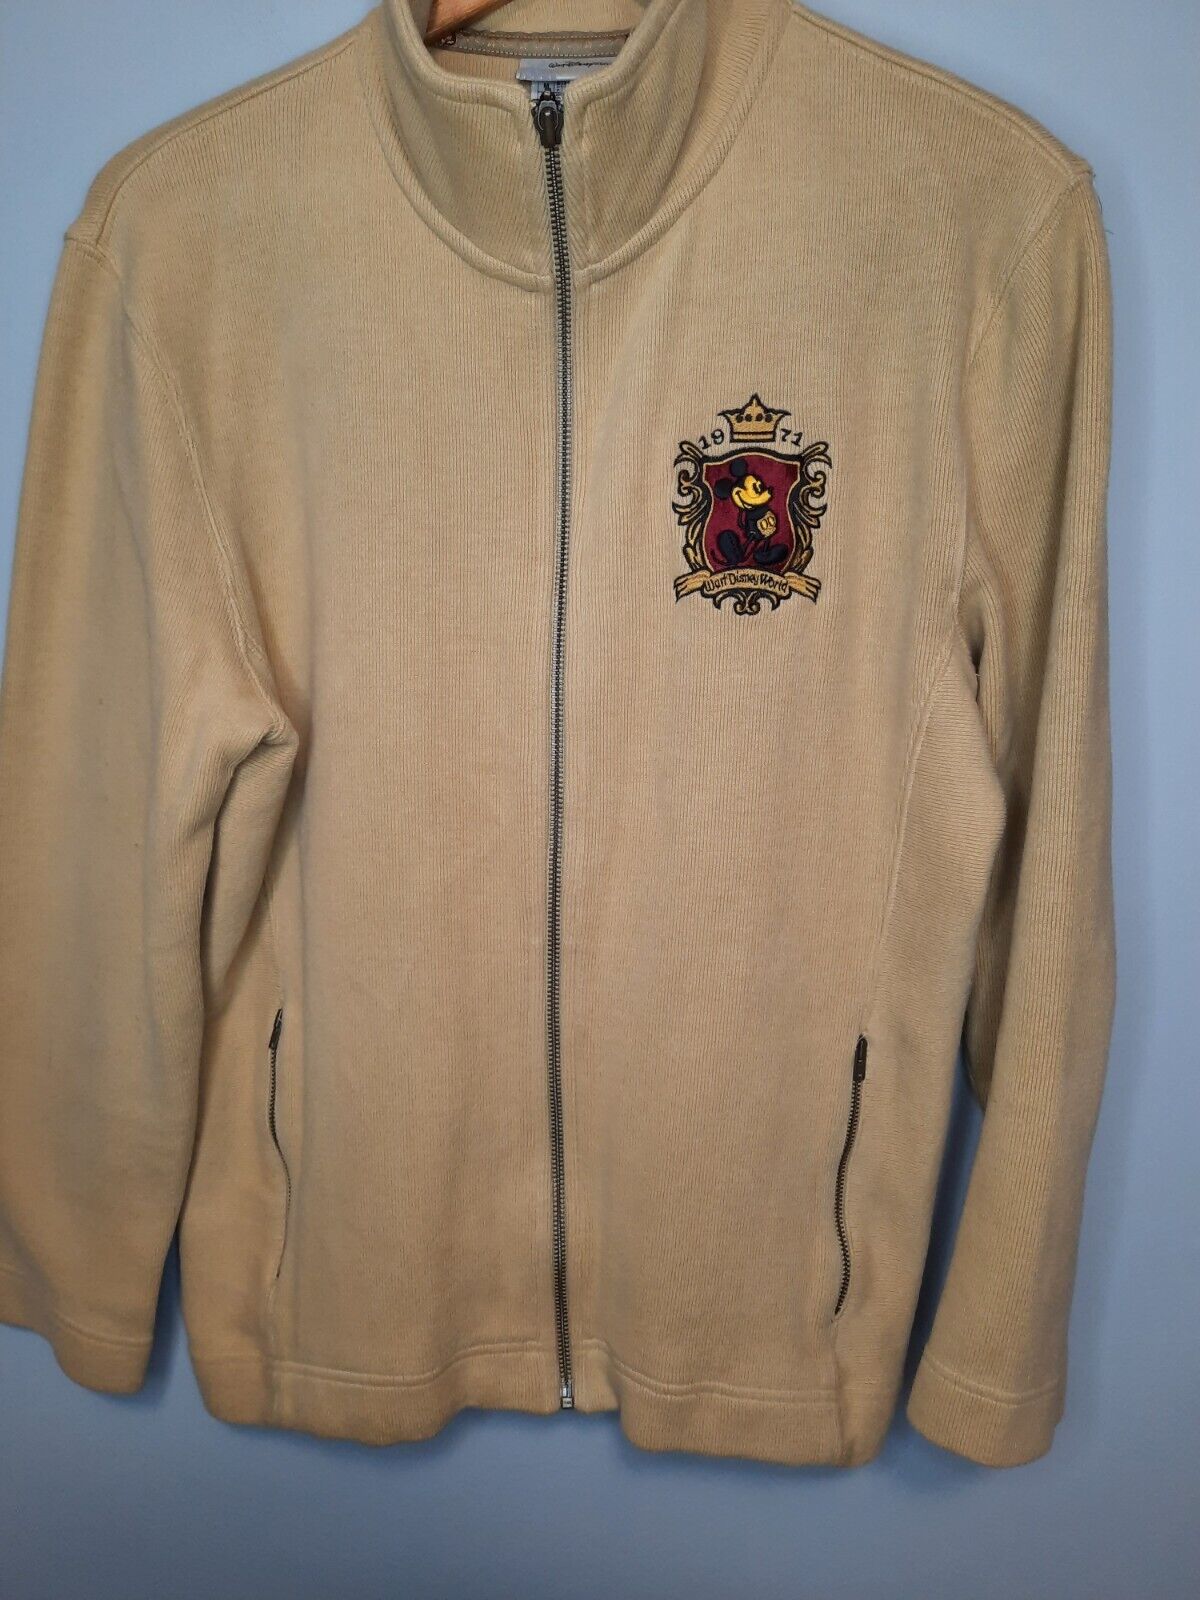 Walt Disney World Vintage 1971 Medium Sweater Jacket Nice Preowned Condition